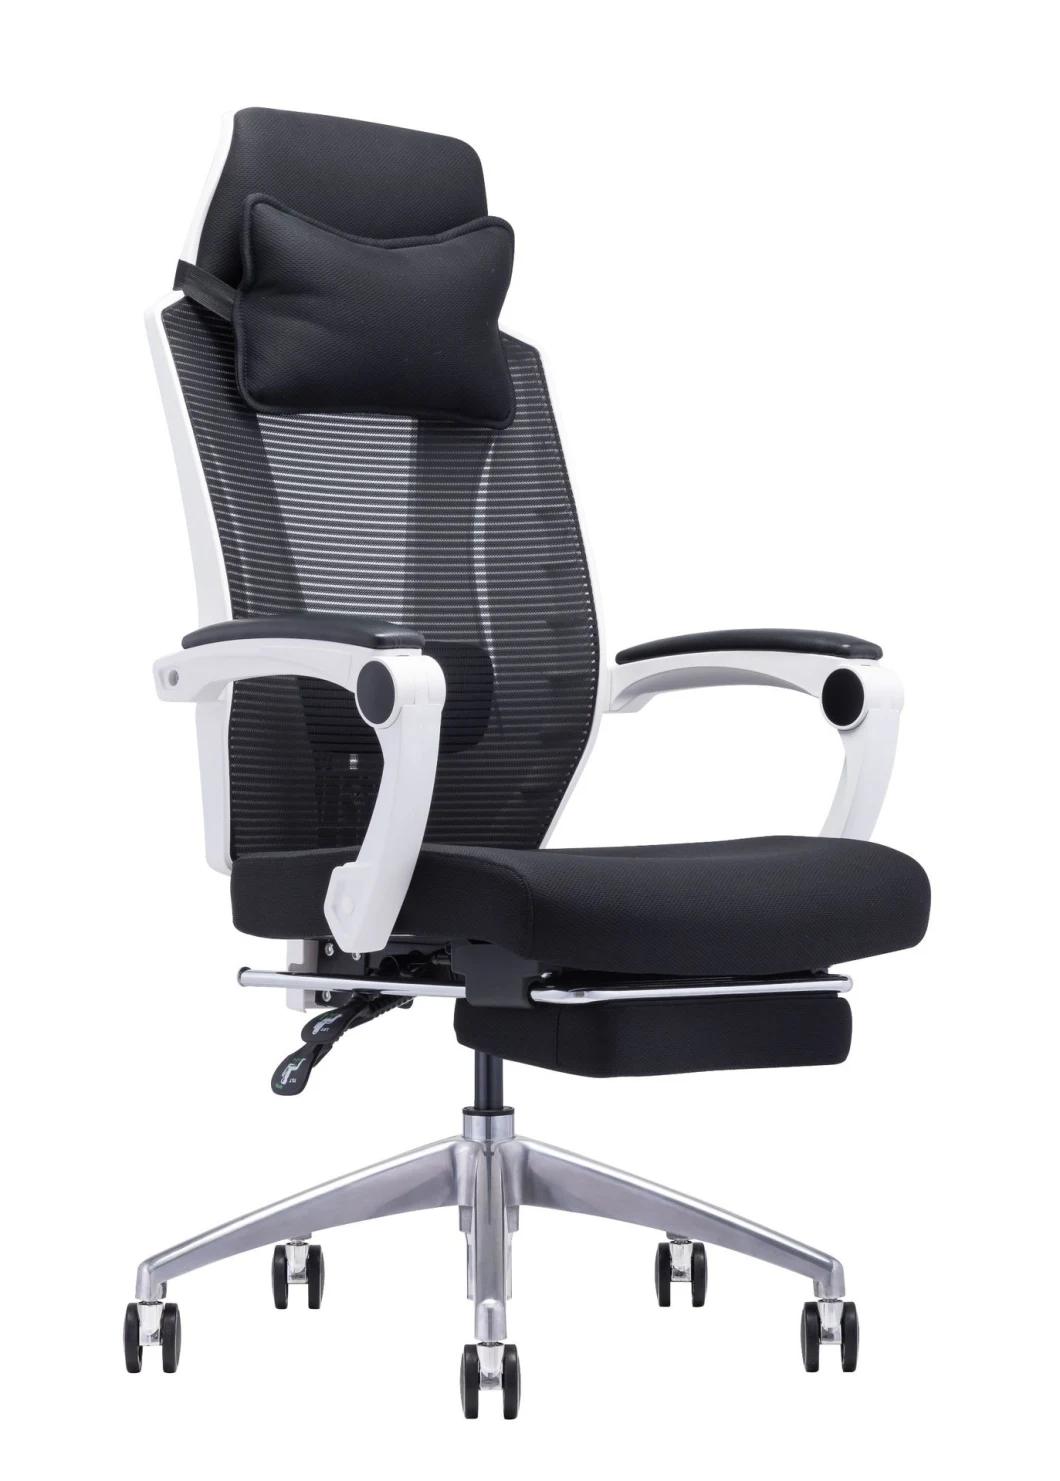 Reclining High Back Office Executive Swivel Ergonomic Racing Computer Gaming Mesh Chair